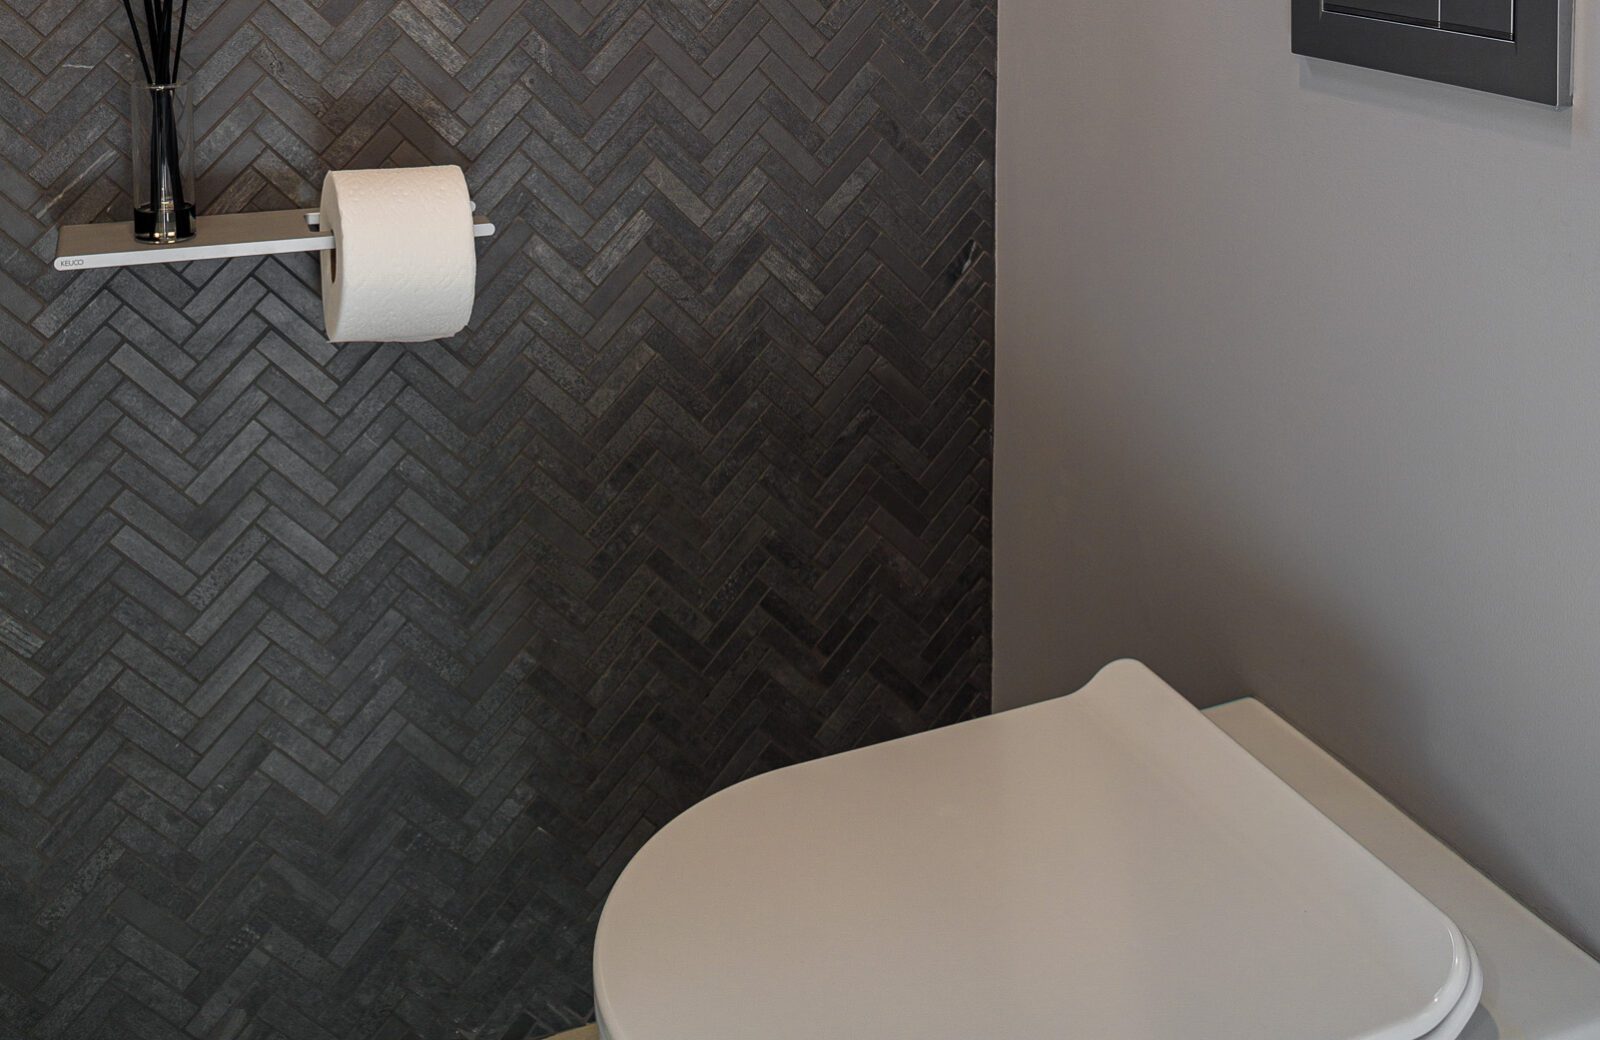 Water closet with dark grey chevron tile wall, white tankless wall mounted toilet